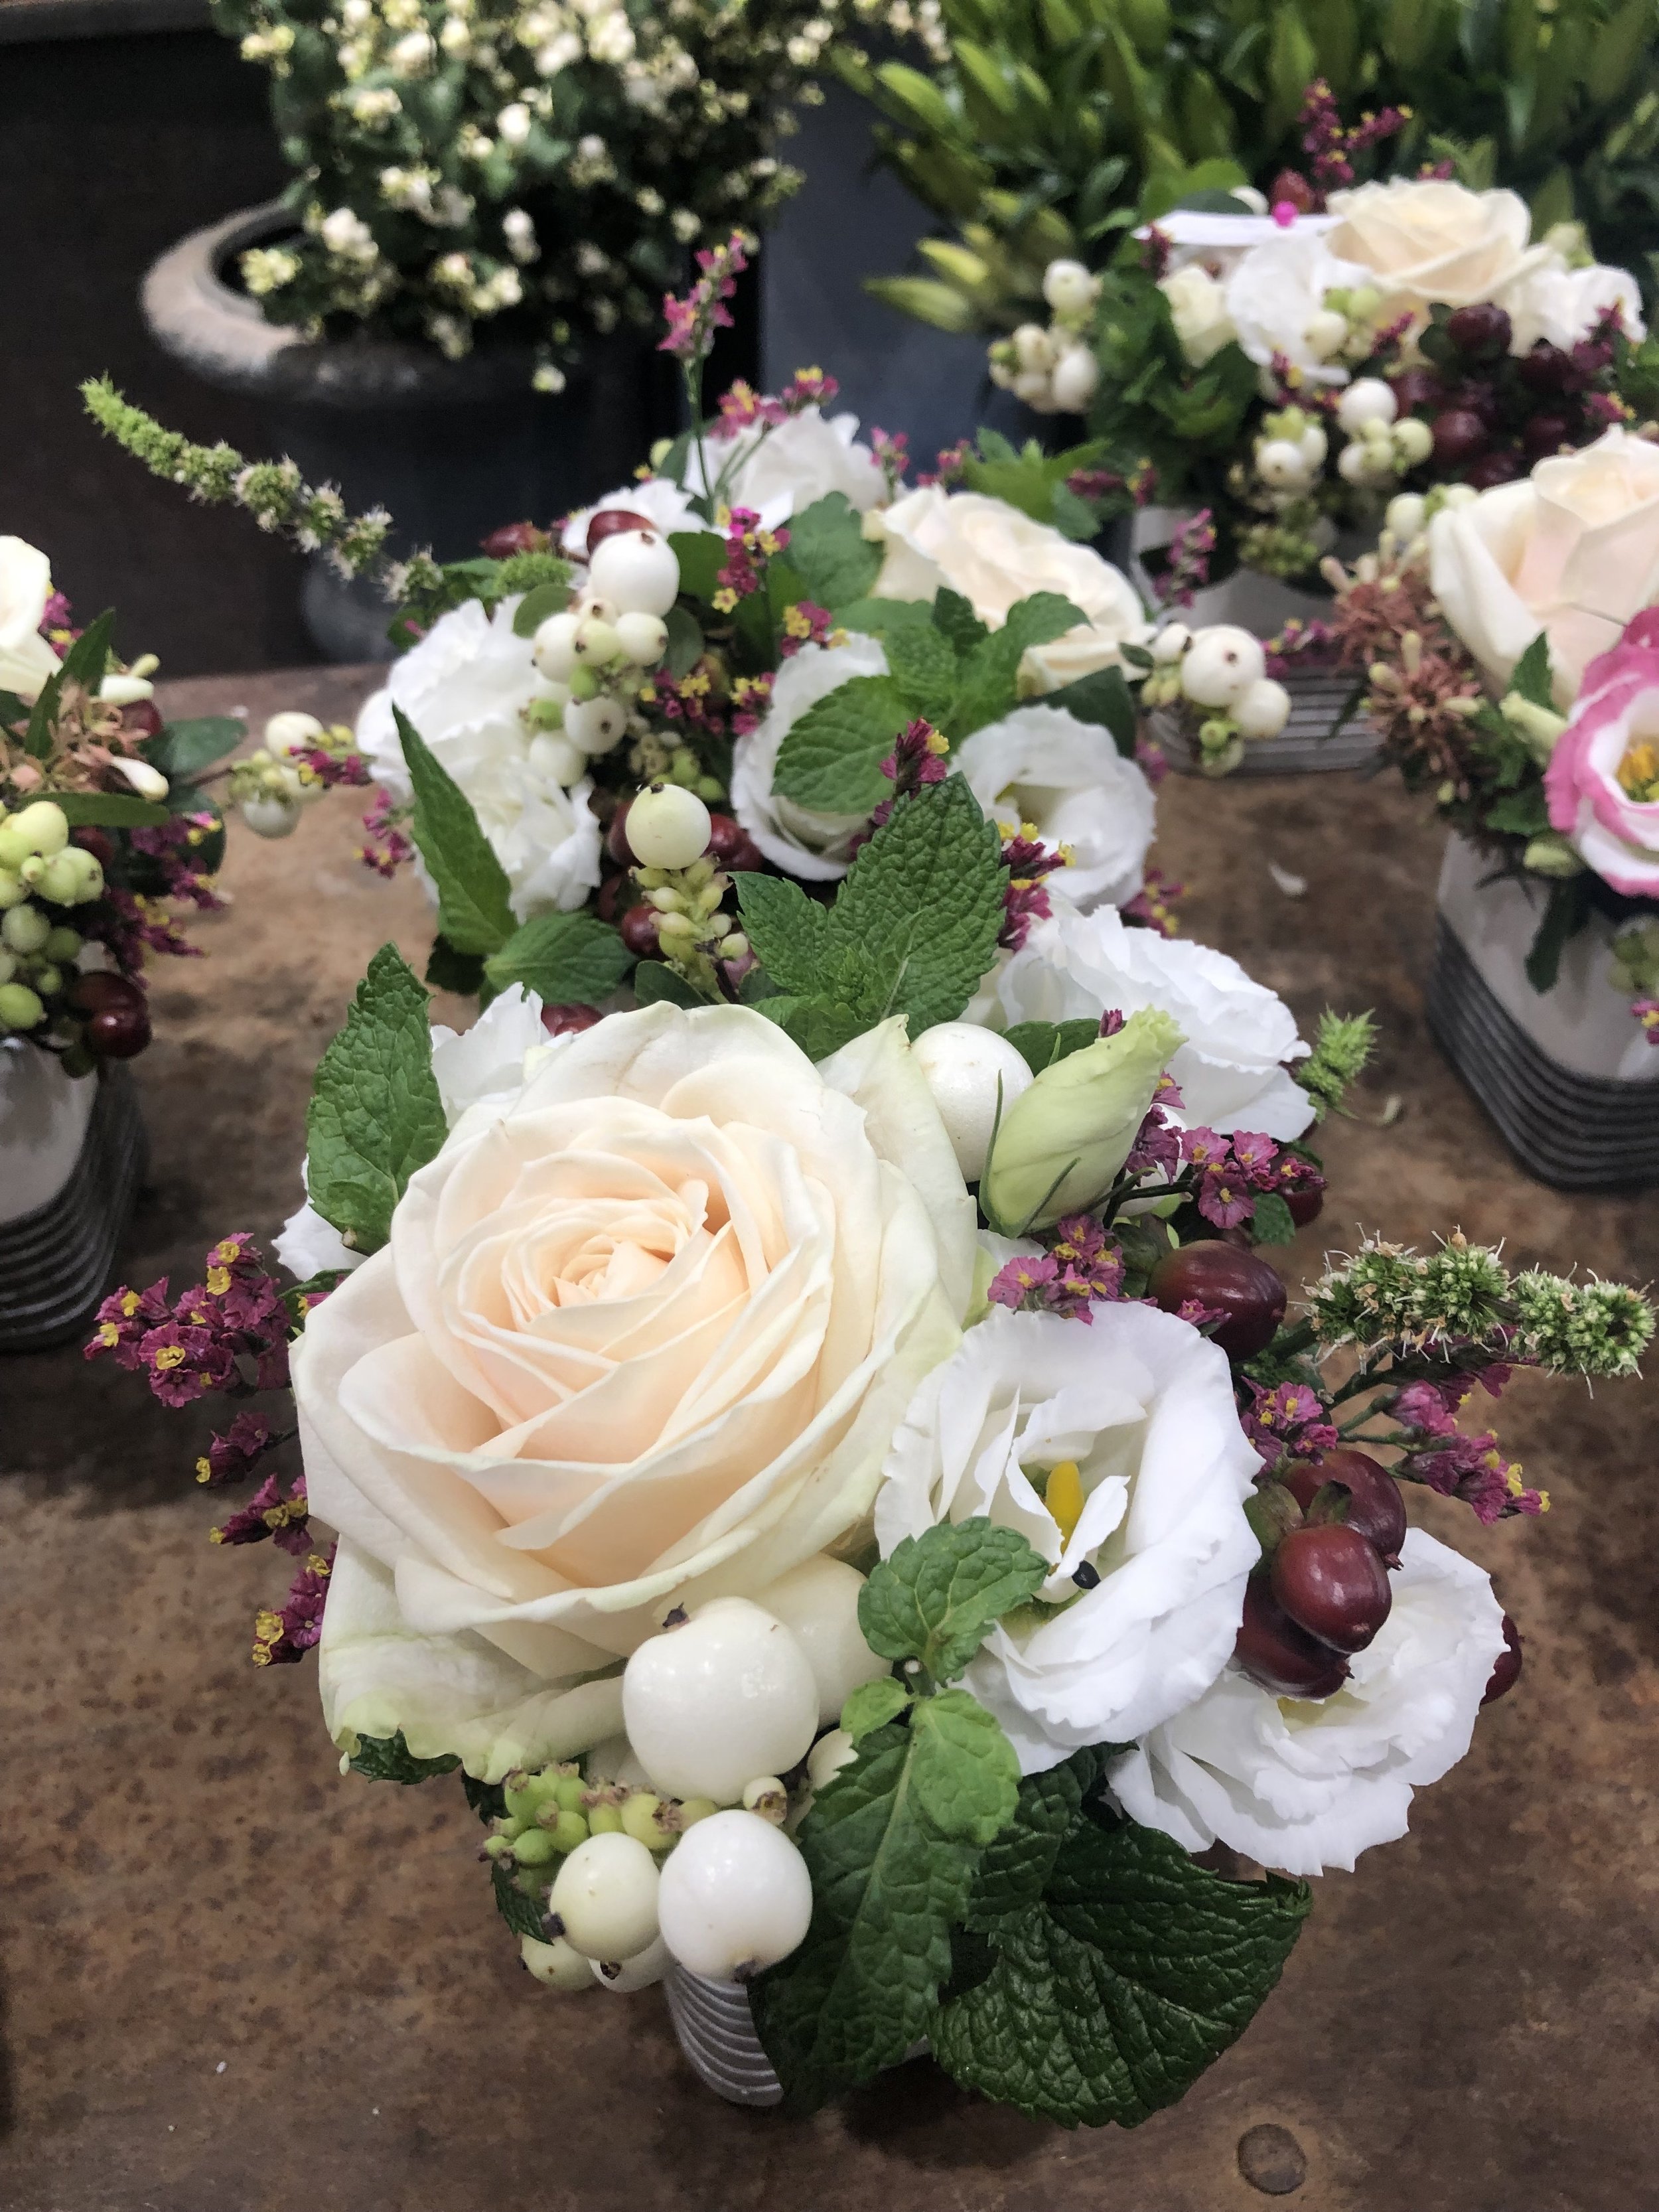 Miniature nosegay arrangements with garden roses, lisianthus, snowberry, mint